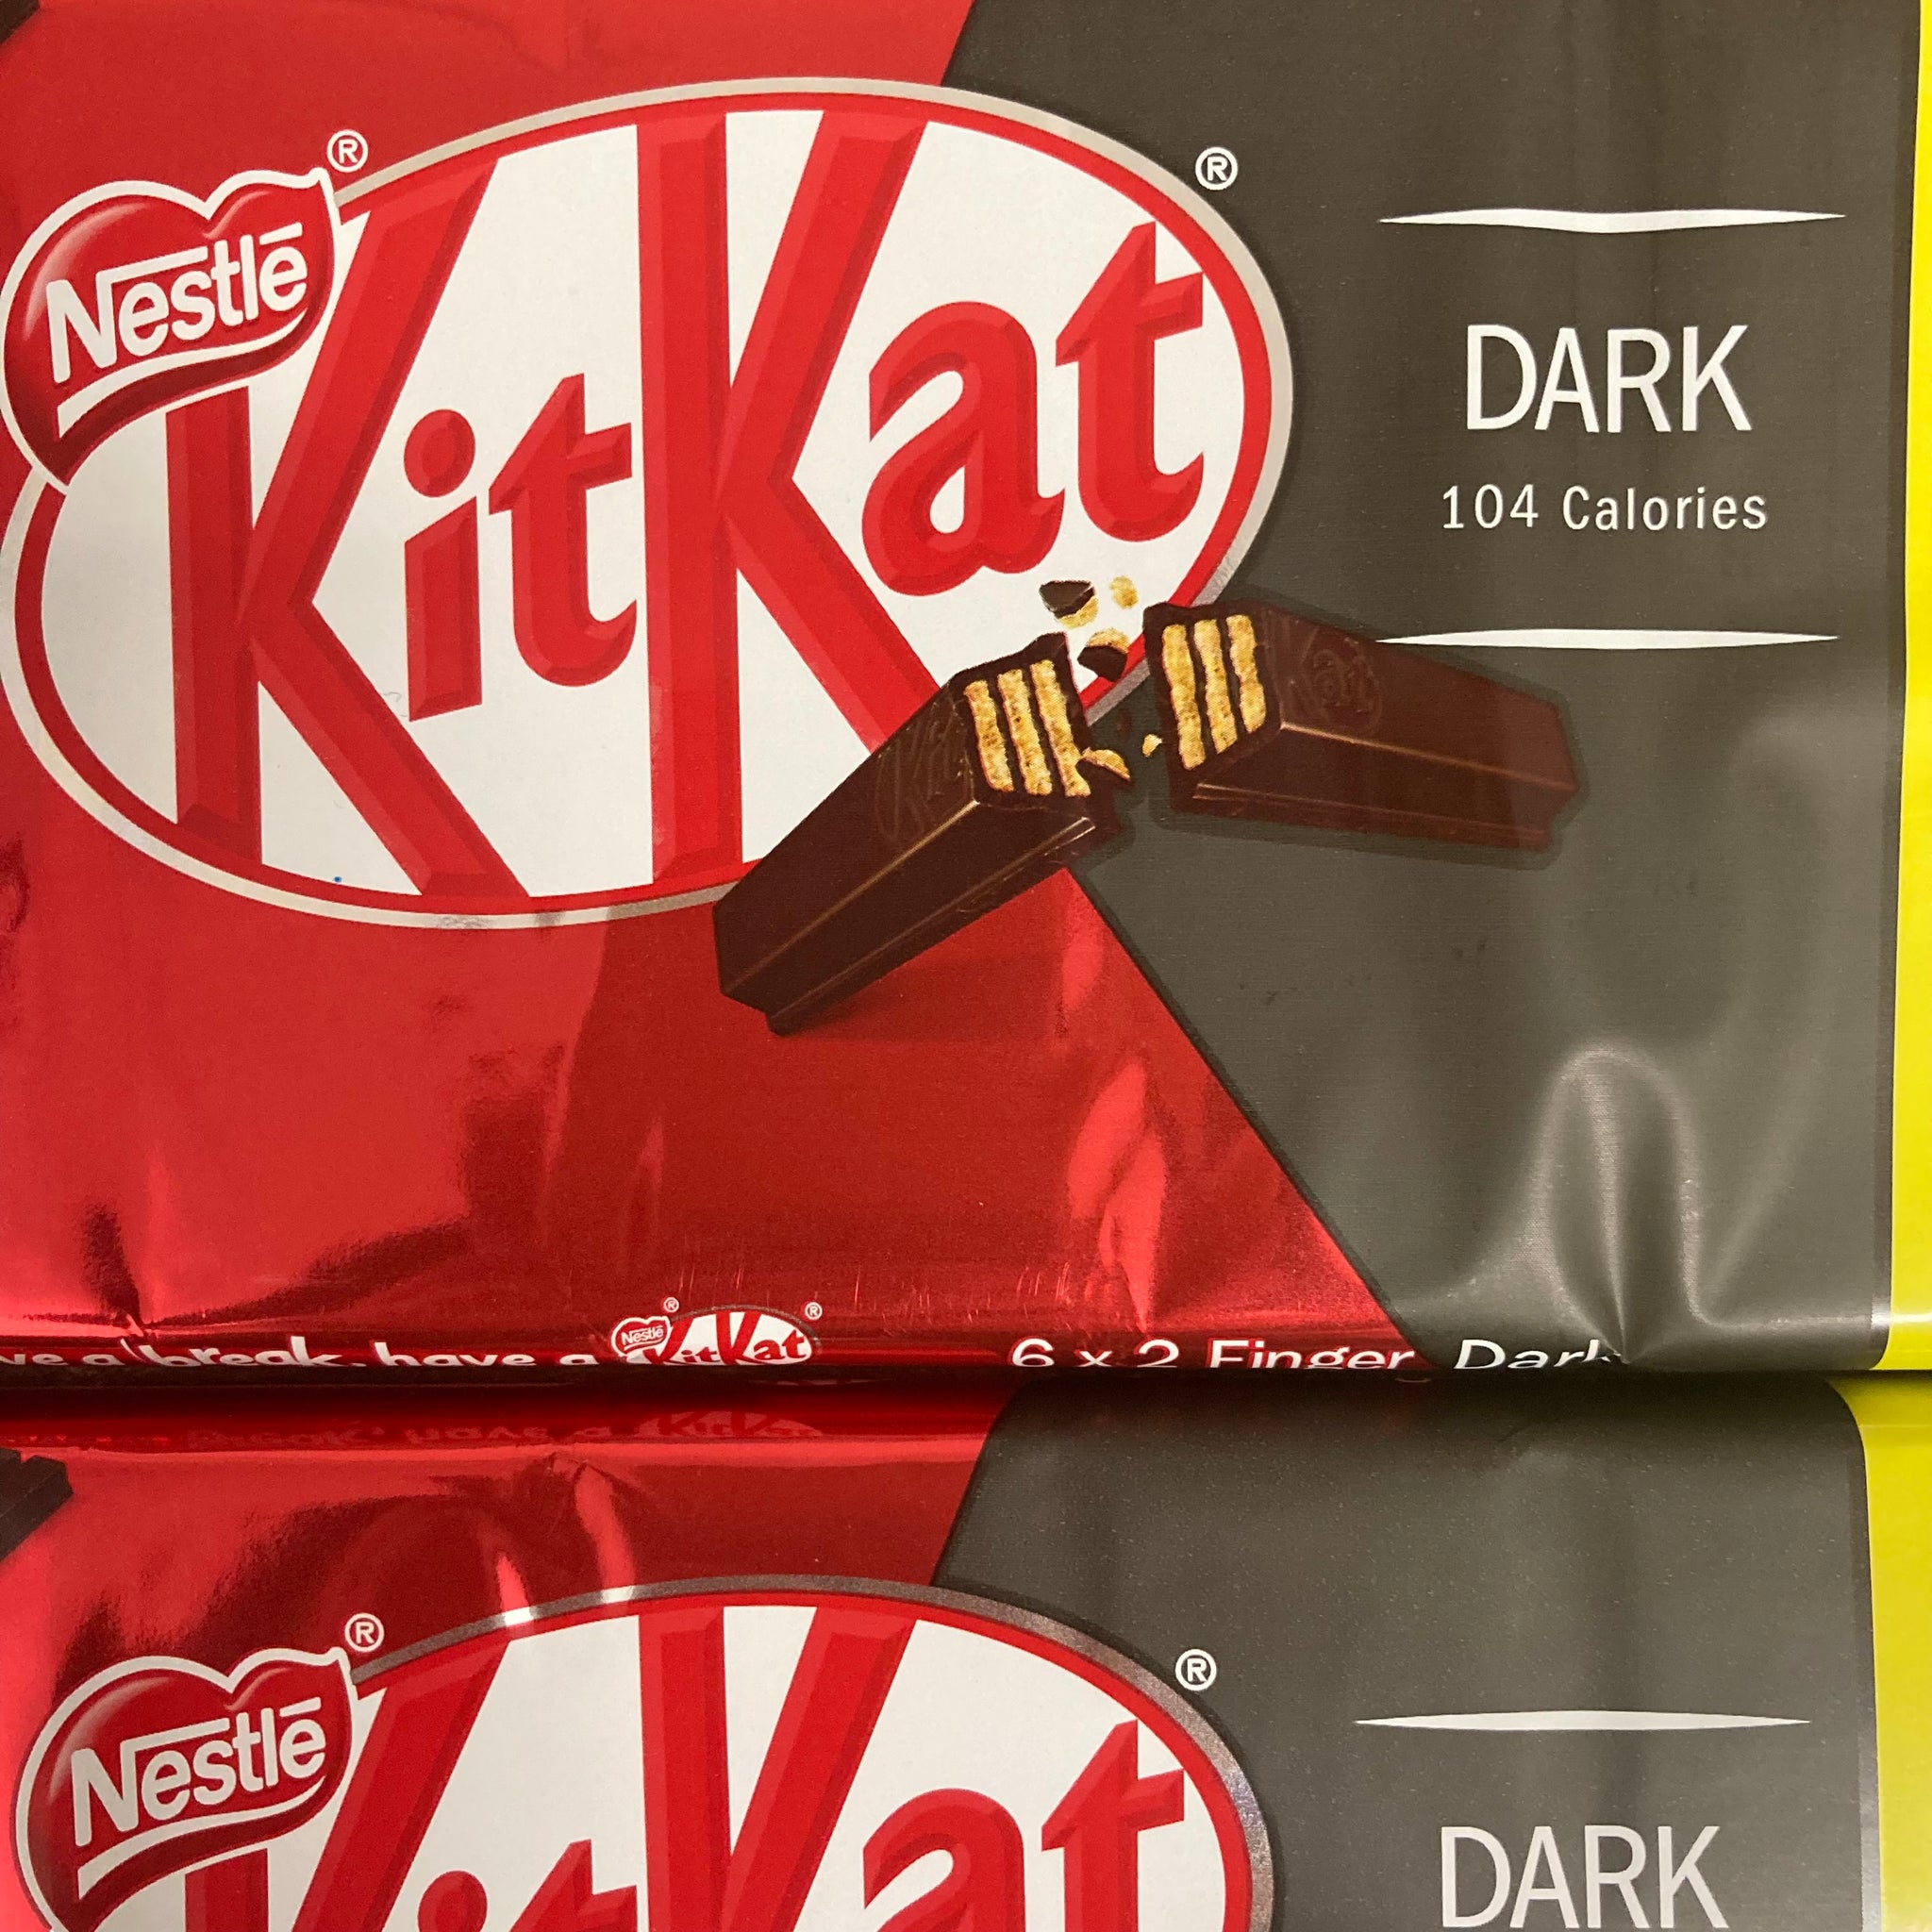 Kit Kat Dark Chocolate